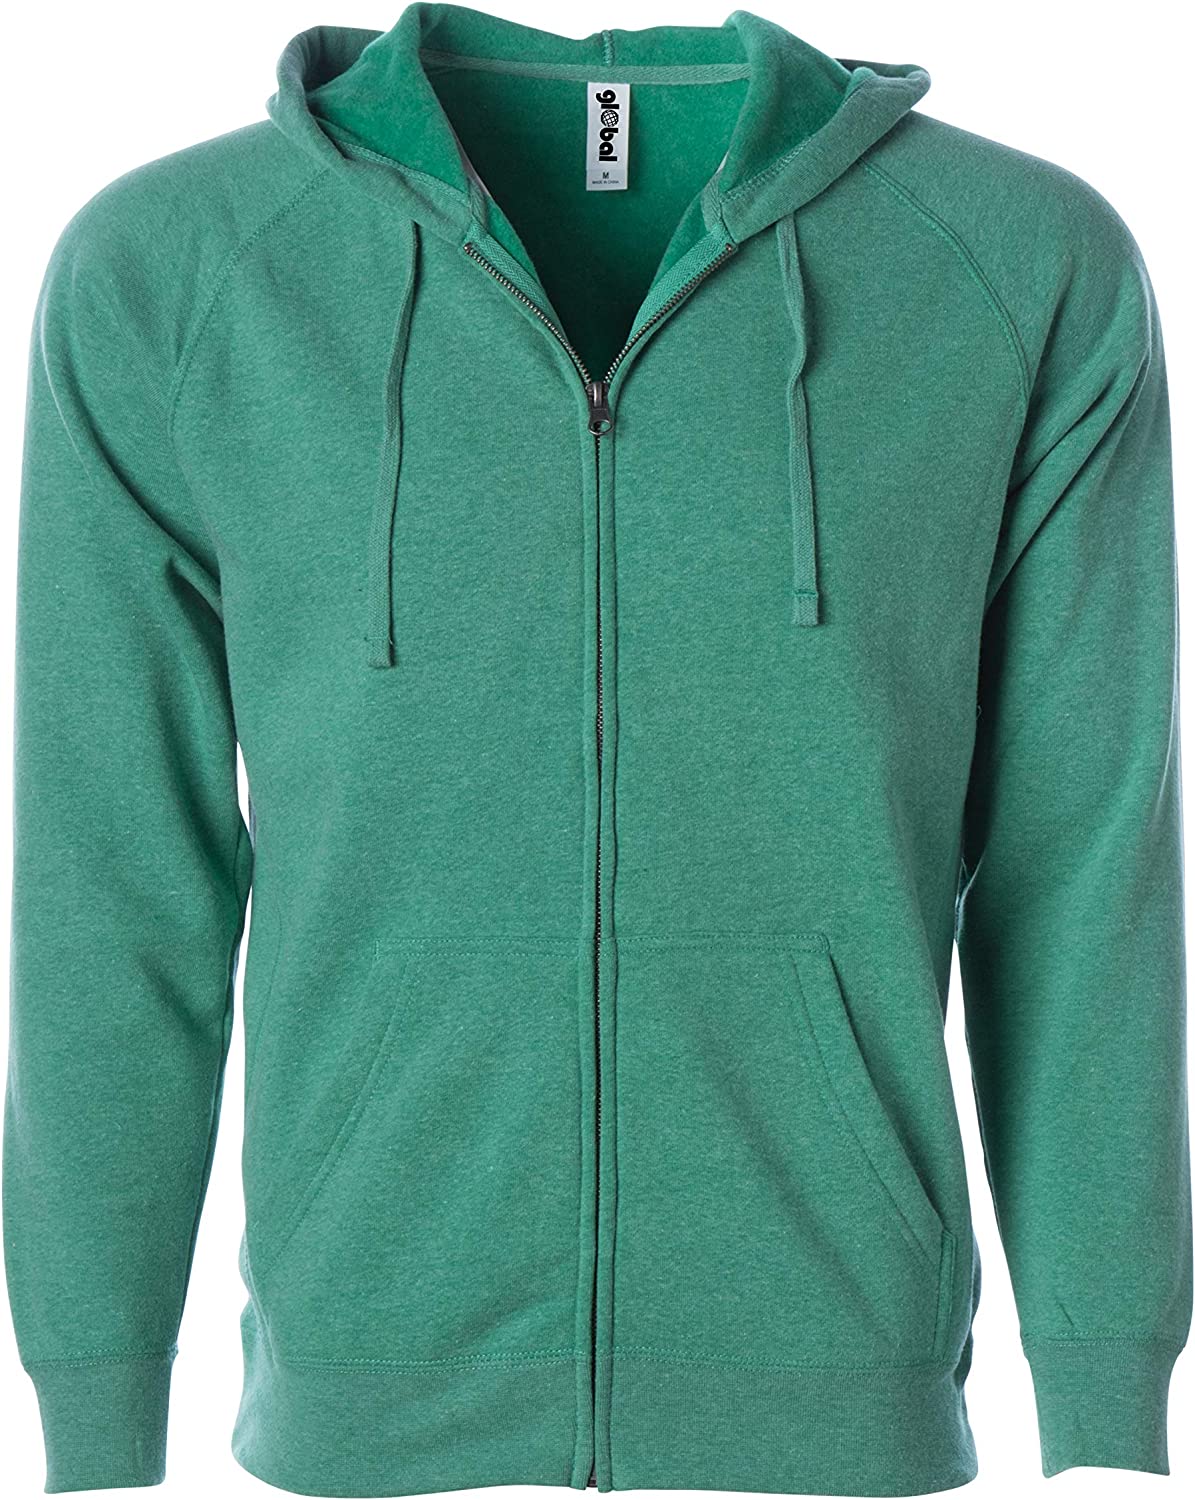 Global Blank Super-Soft Fleece Sweatshirts for Men and Women, Zip-Up Hoodie  : : Clothing, Shoes & Accessories